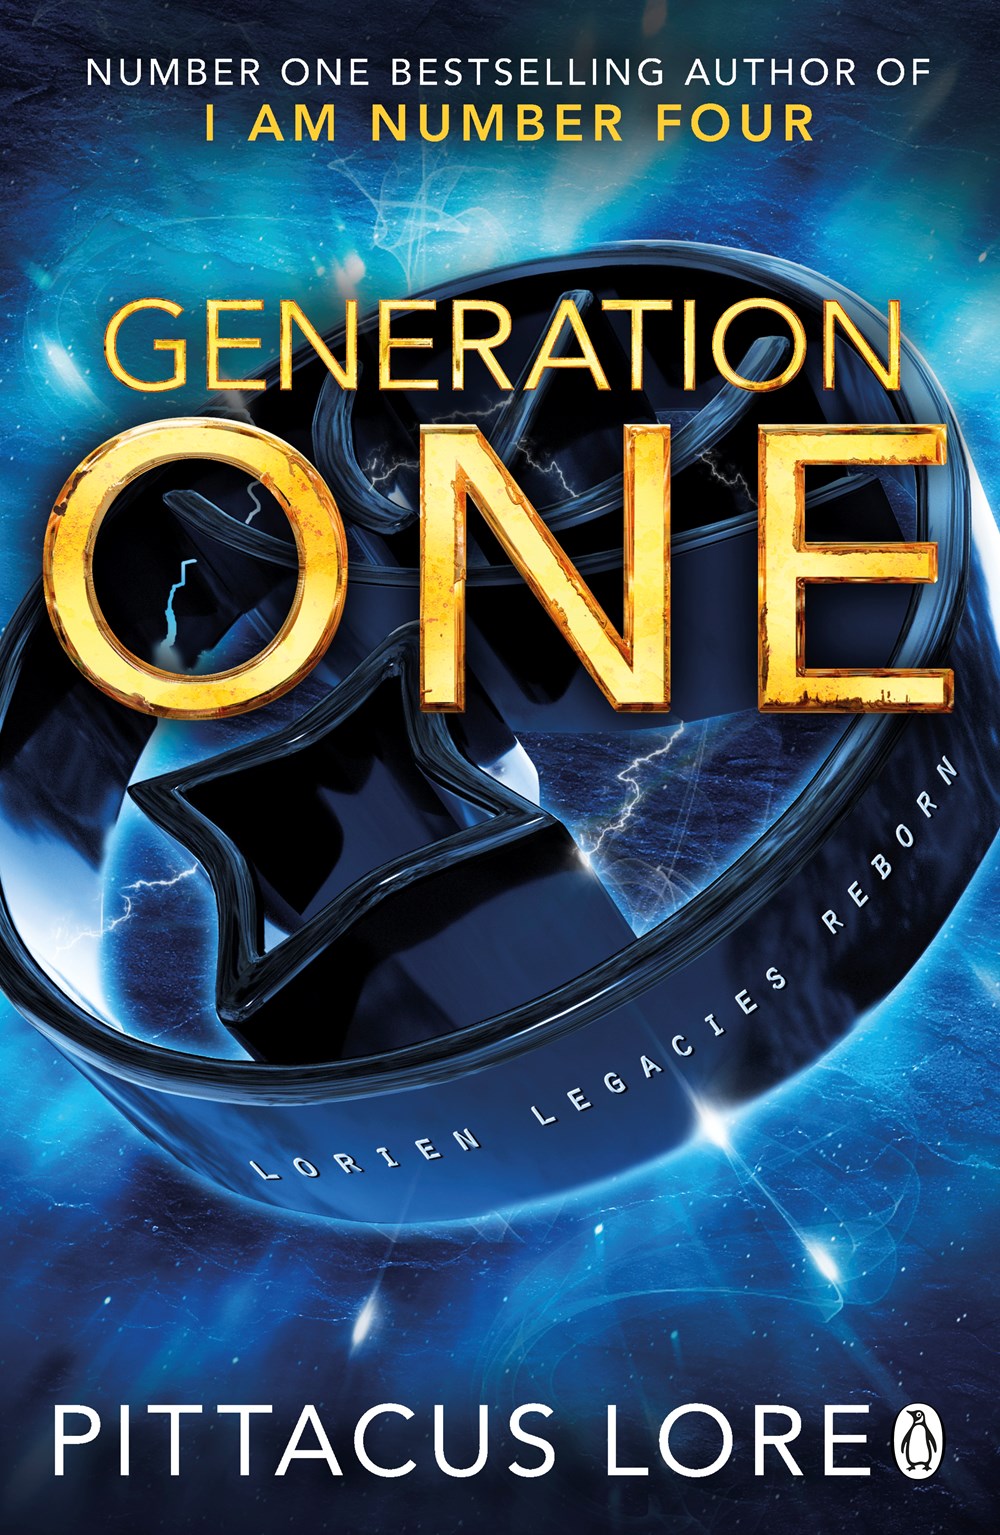 Generation One